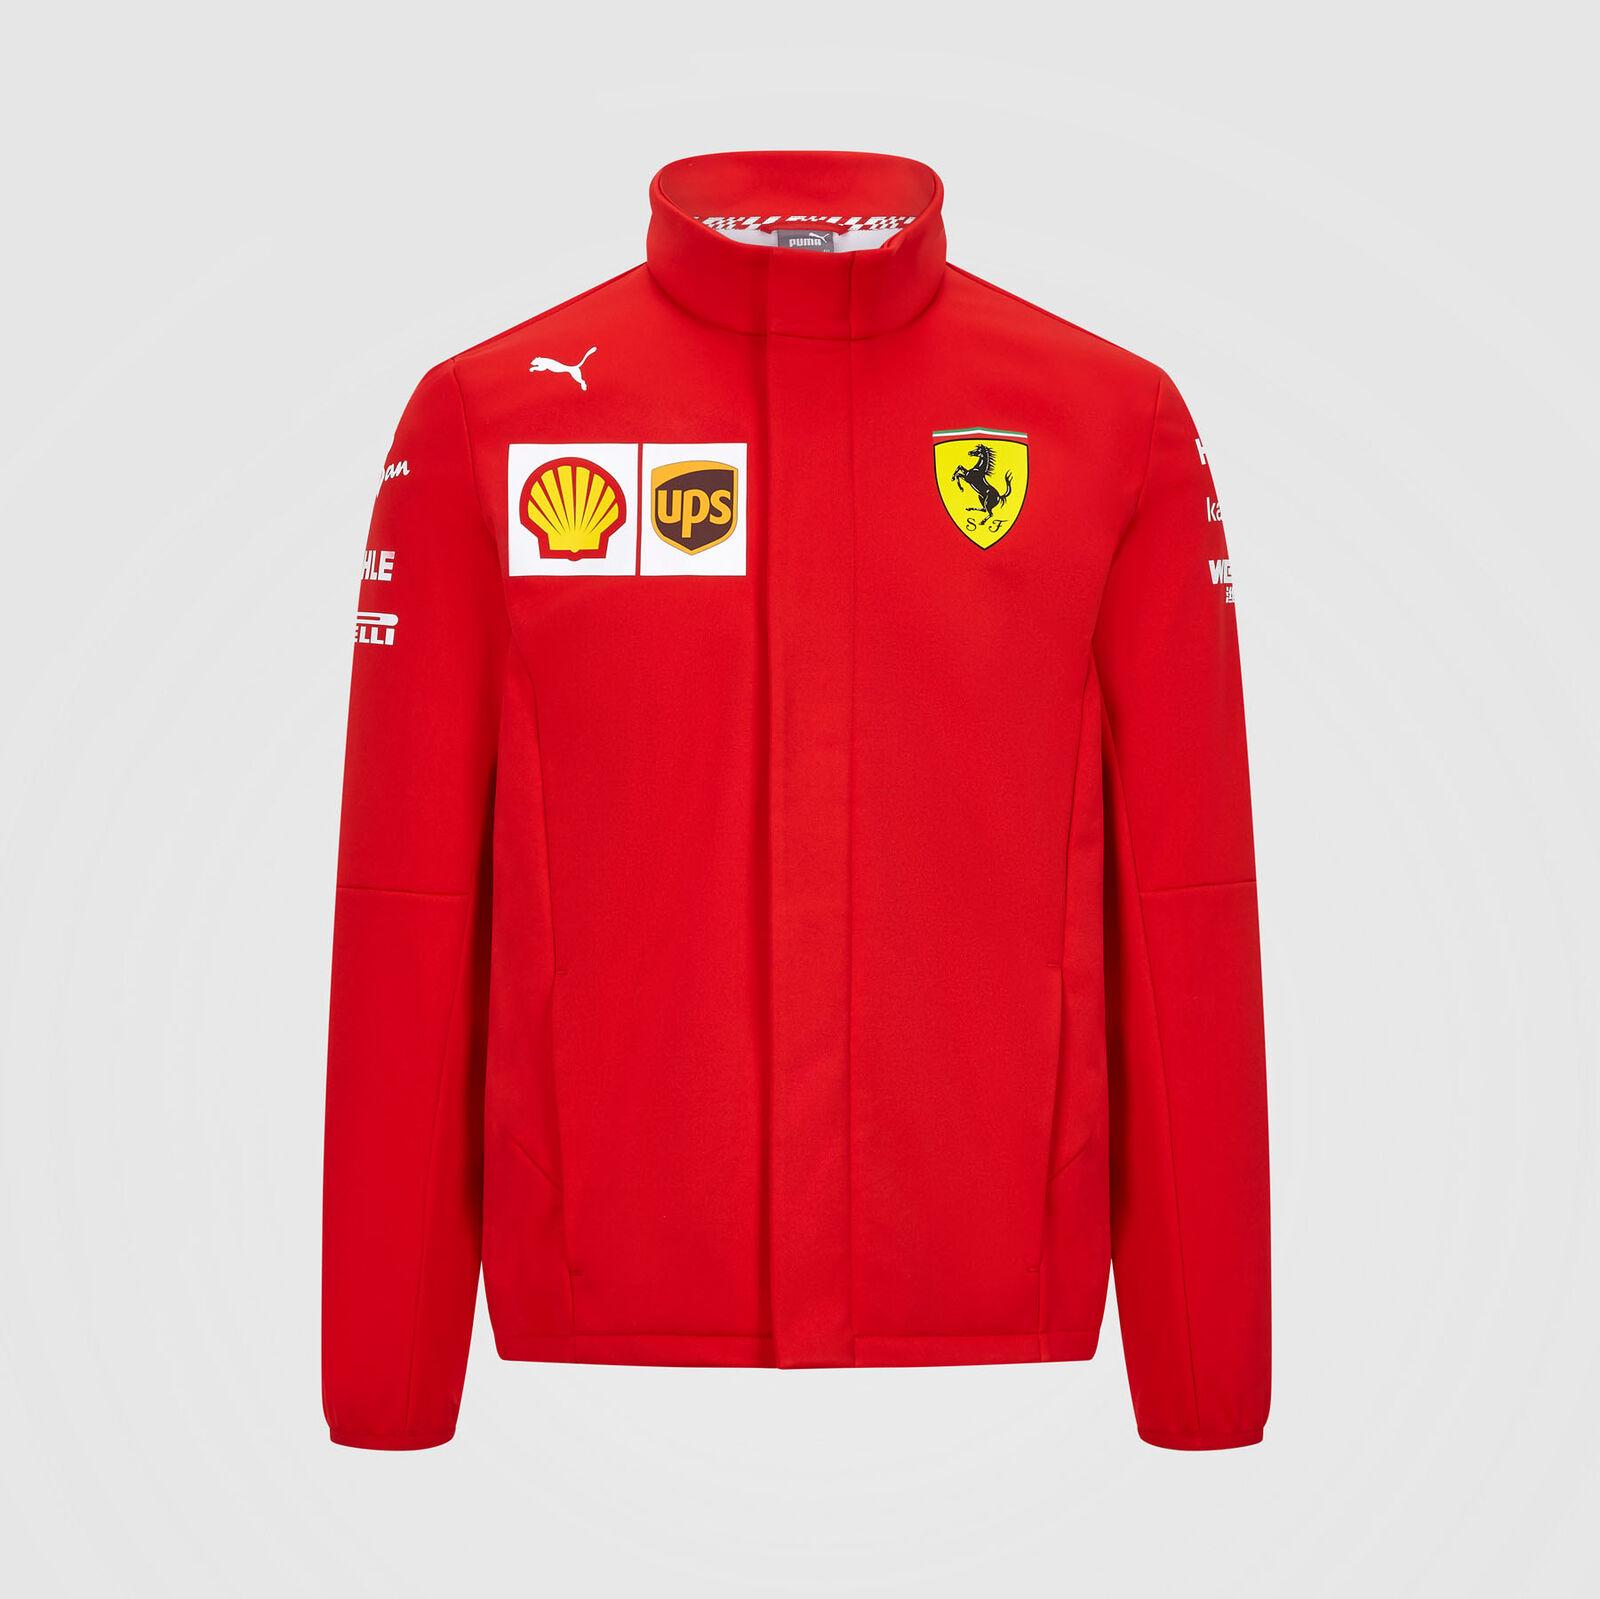  Scuderia Ferrari - Producto oficial de Fórmula 1 - Chaqueta de  verano del equipo 2022 - Rojo, talla M, Rojo - : Automotriz